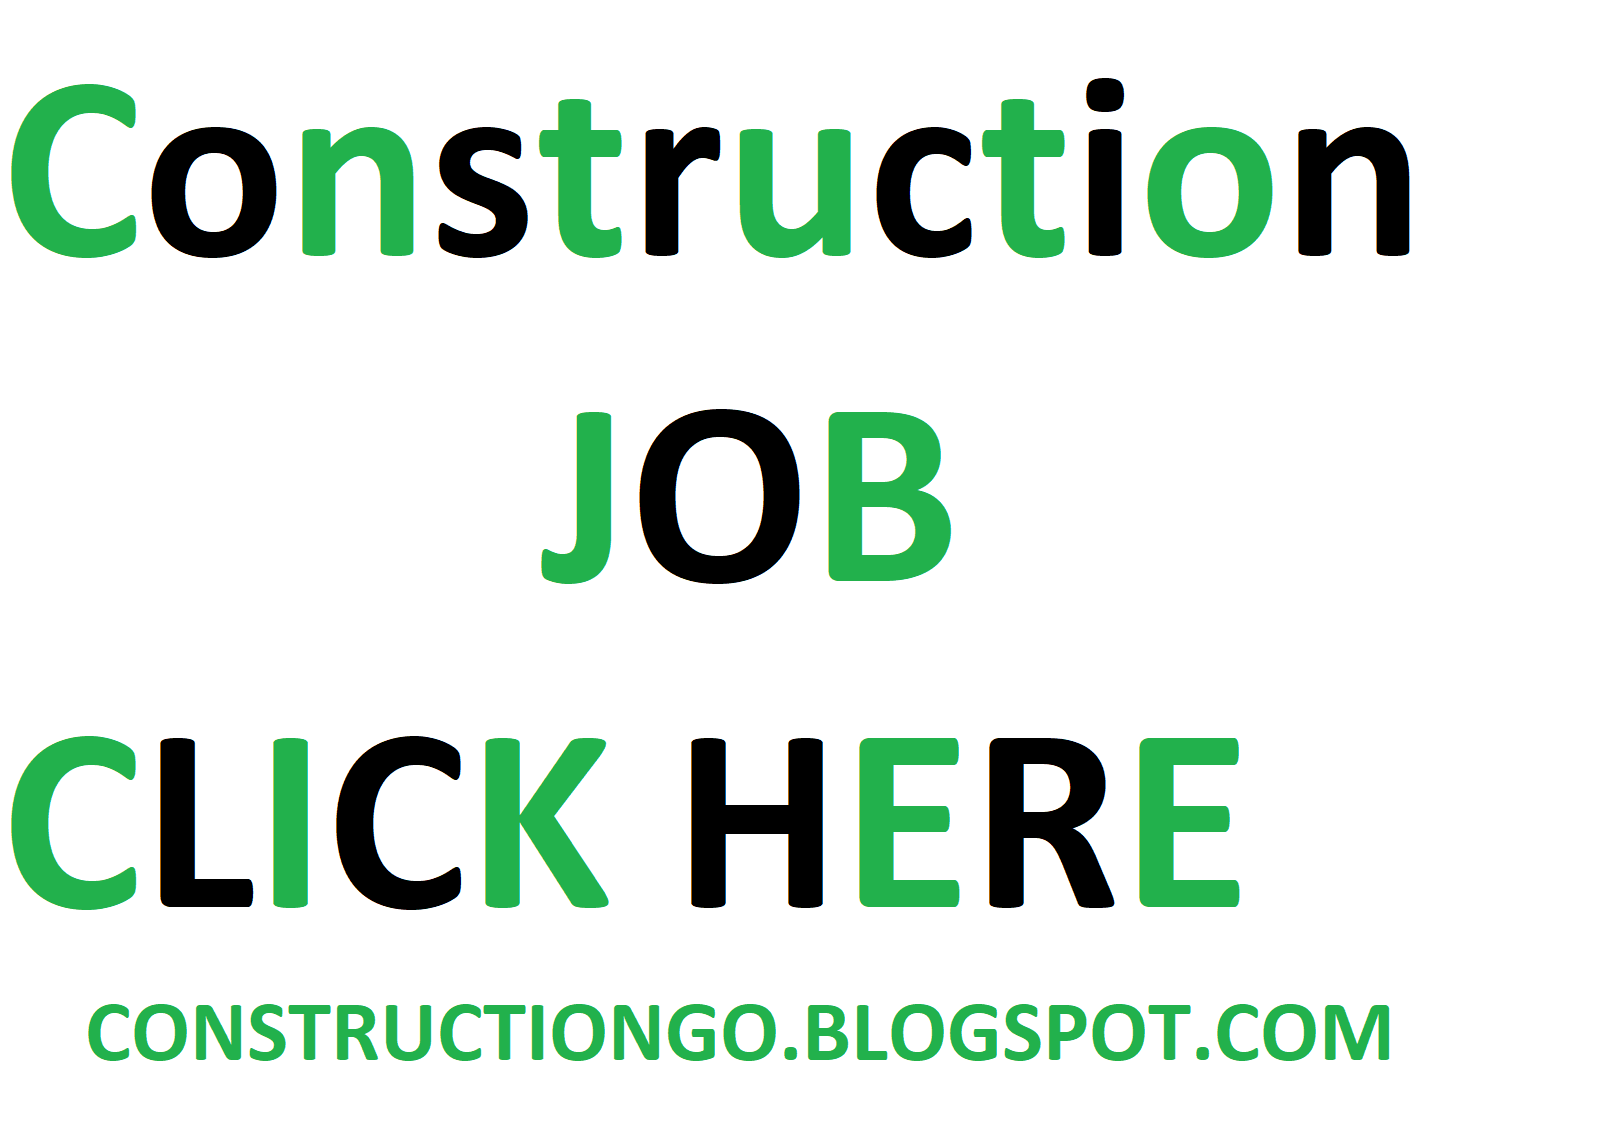 Construction Job's